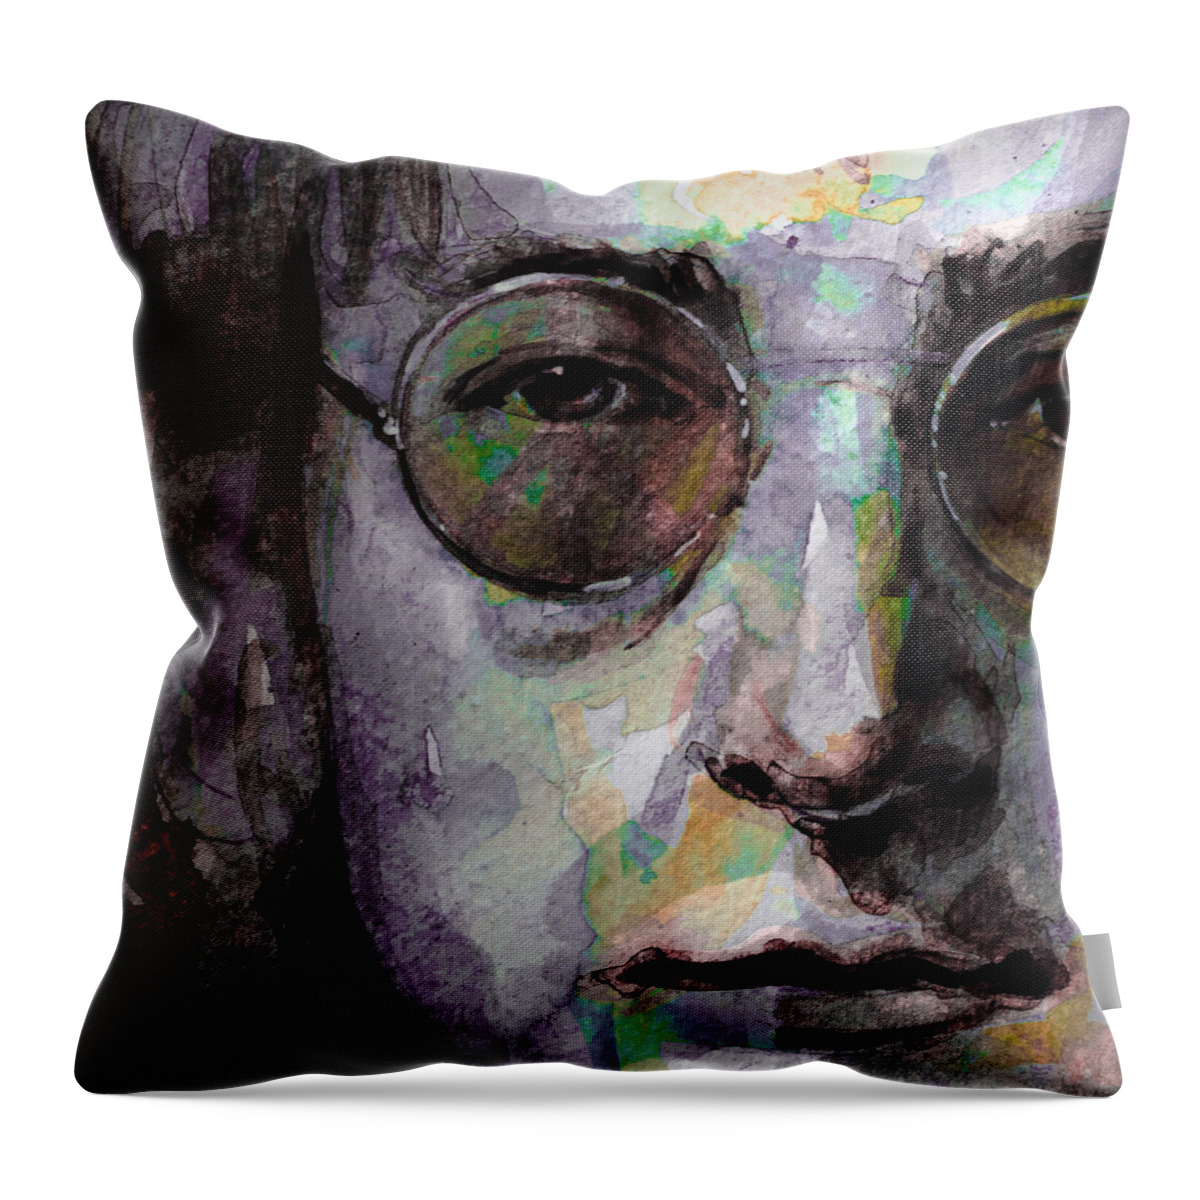 John Lennon Throw Pillow featuring the painting Beatles - John Lennon by Laur Iduc